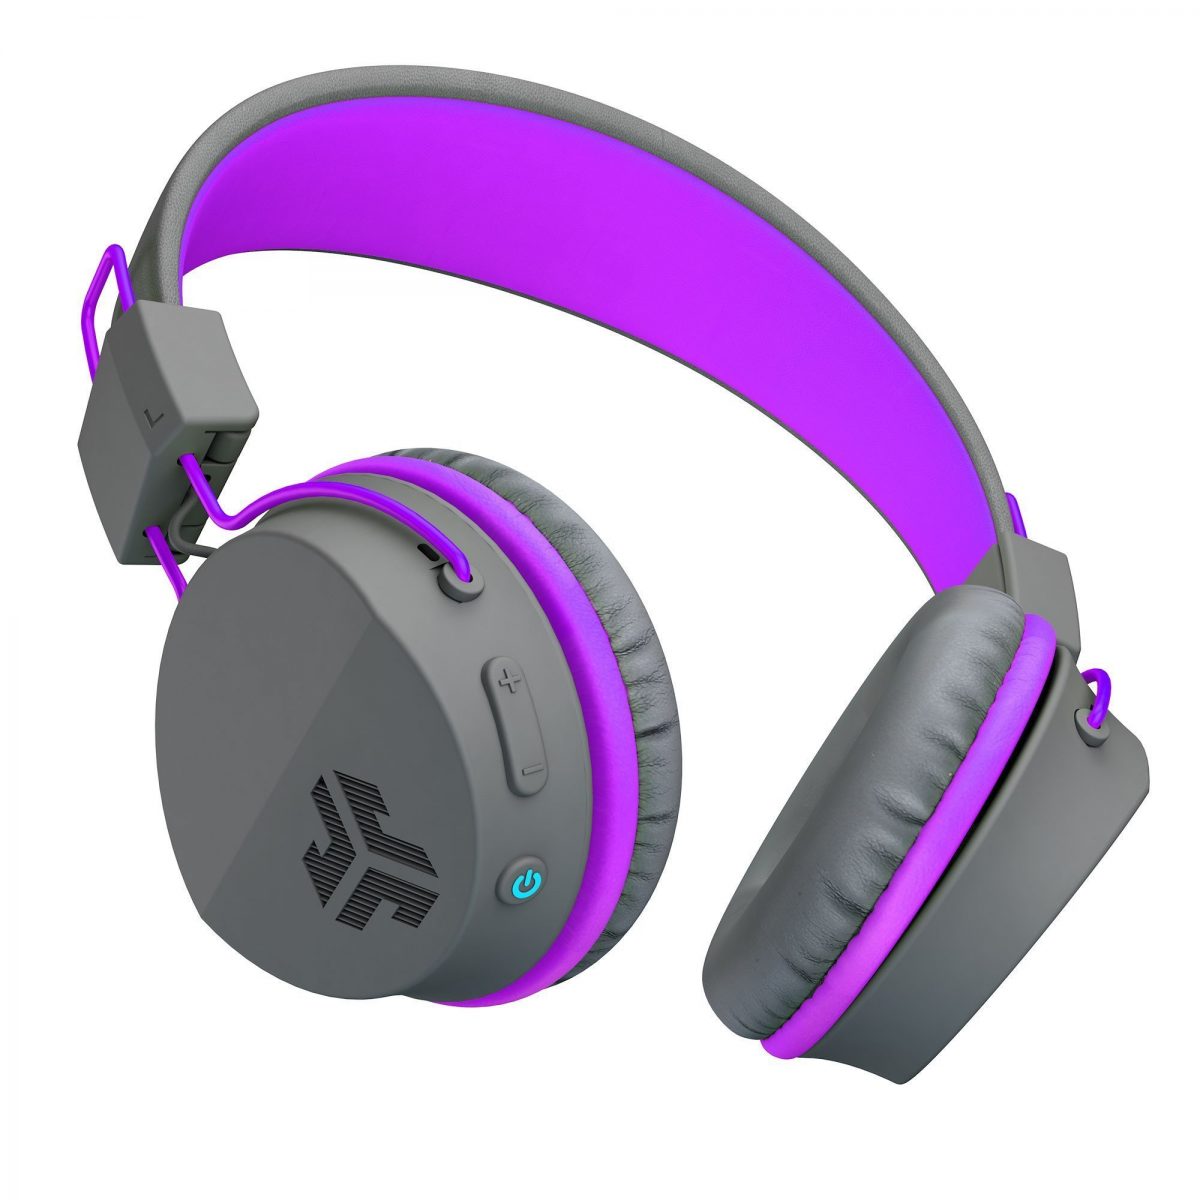 JLab Neon Wireless Headphone Review